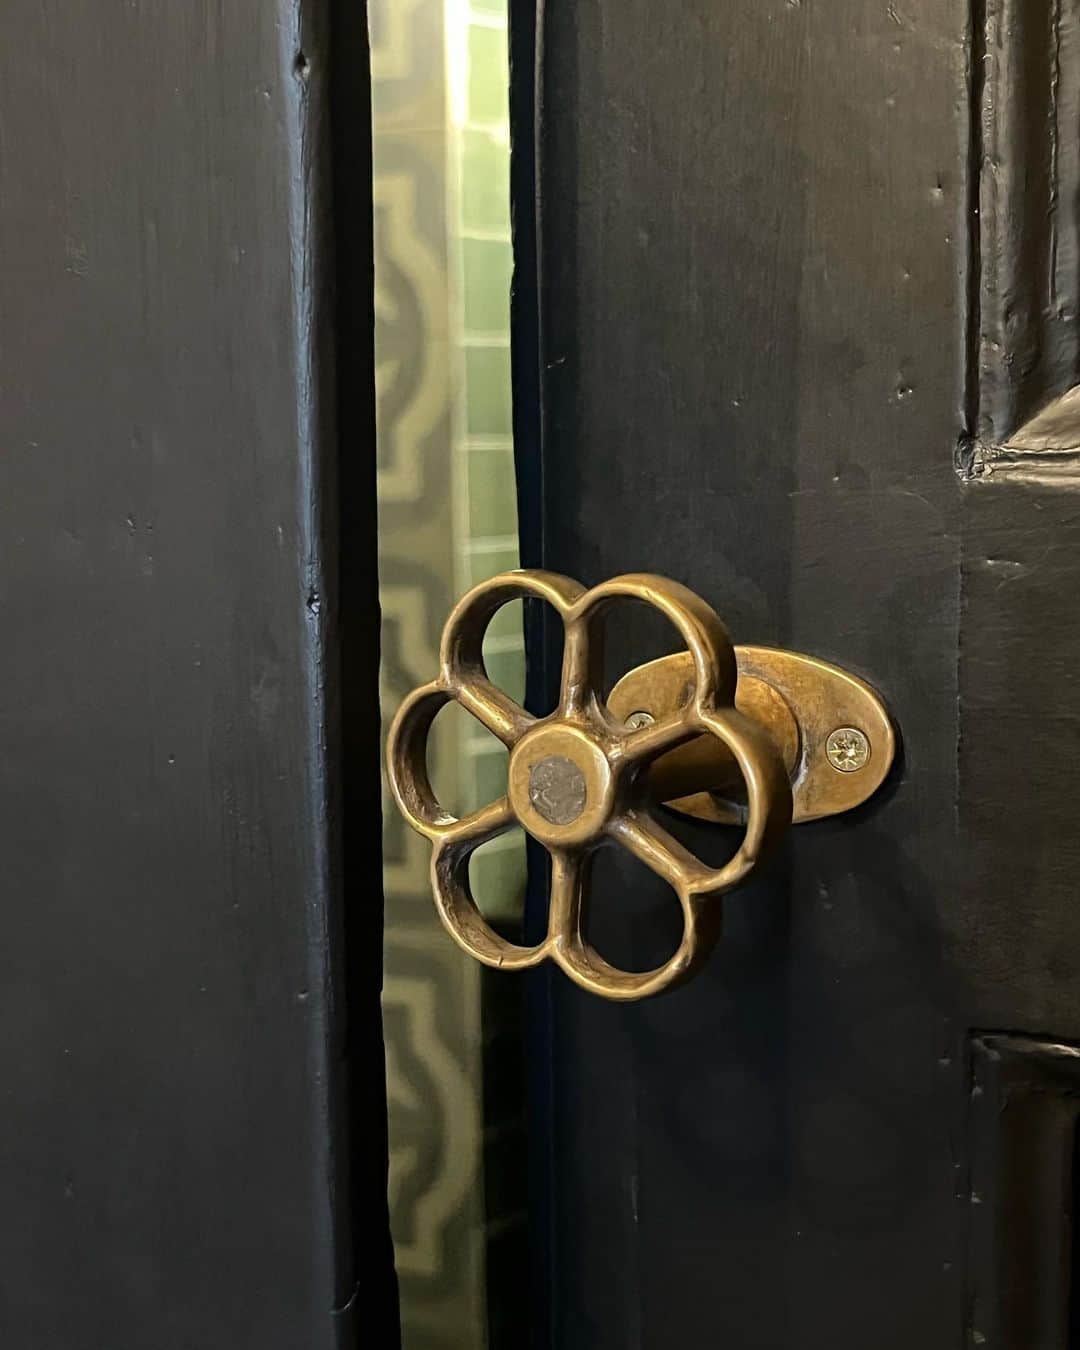 Keyed entry door knobs